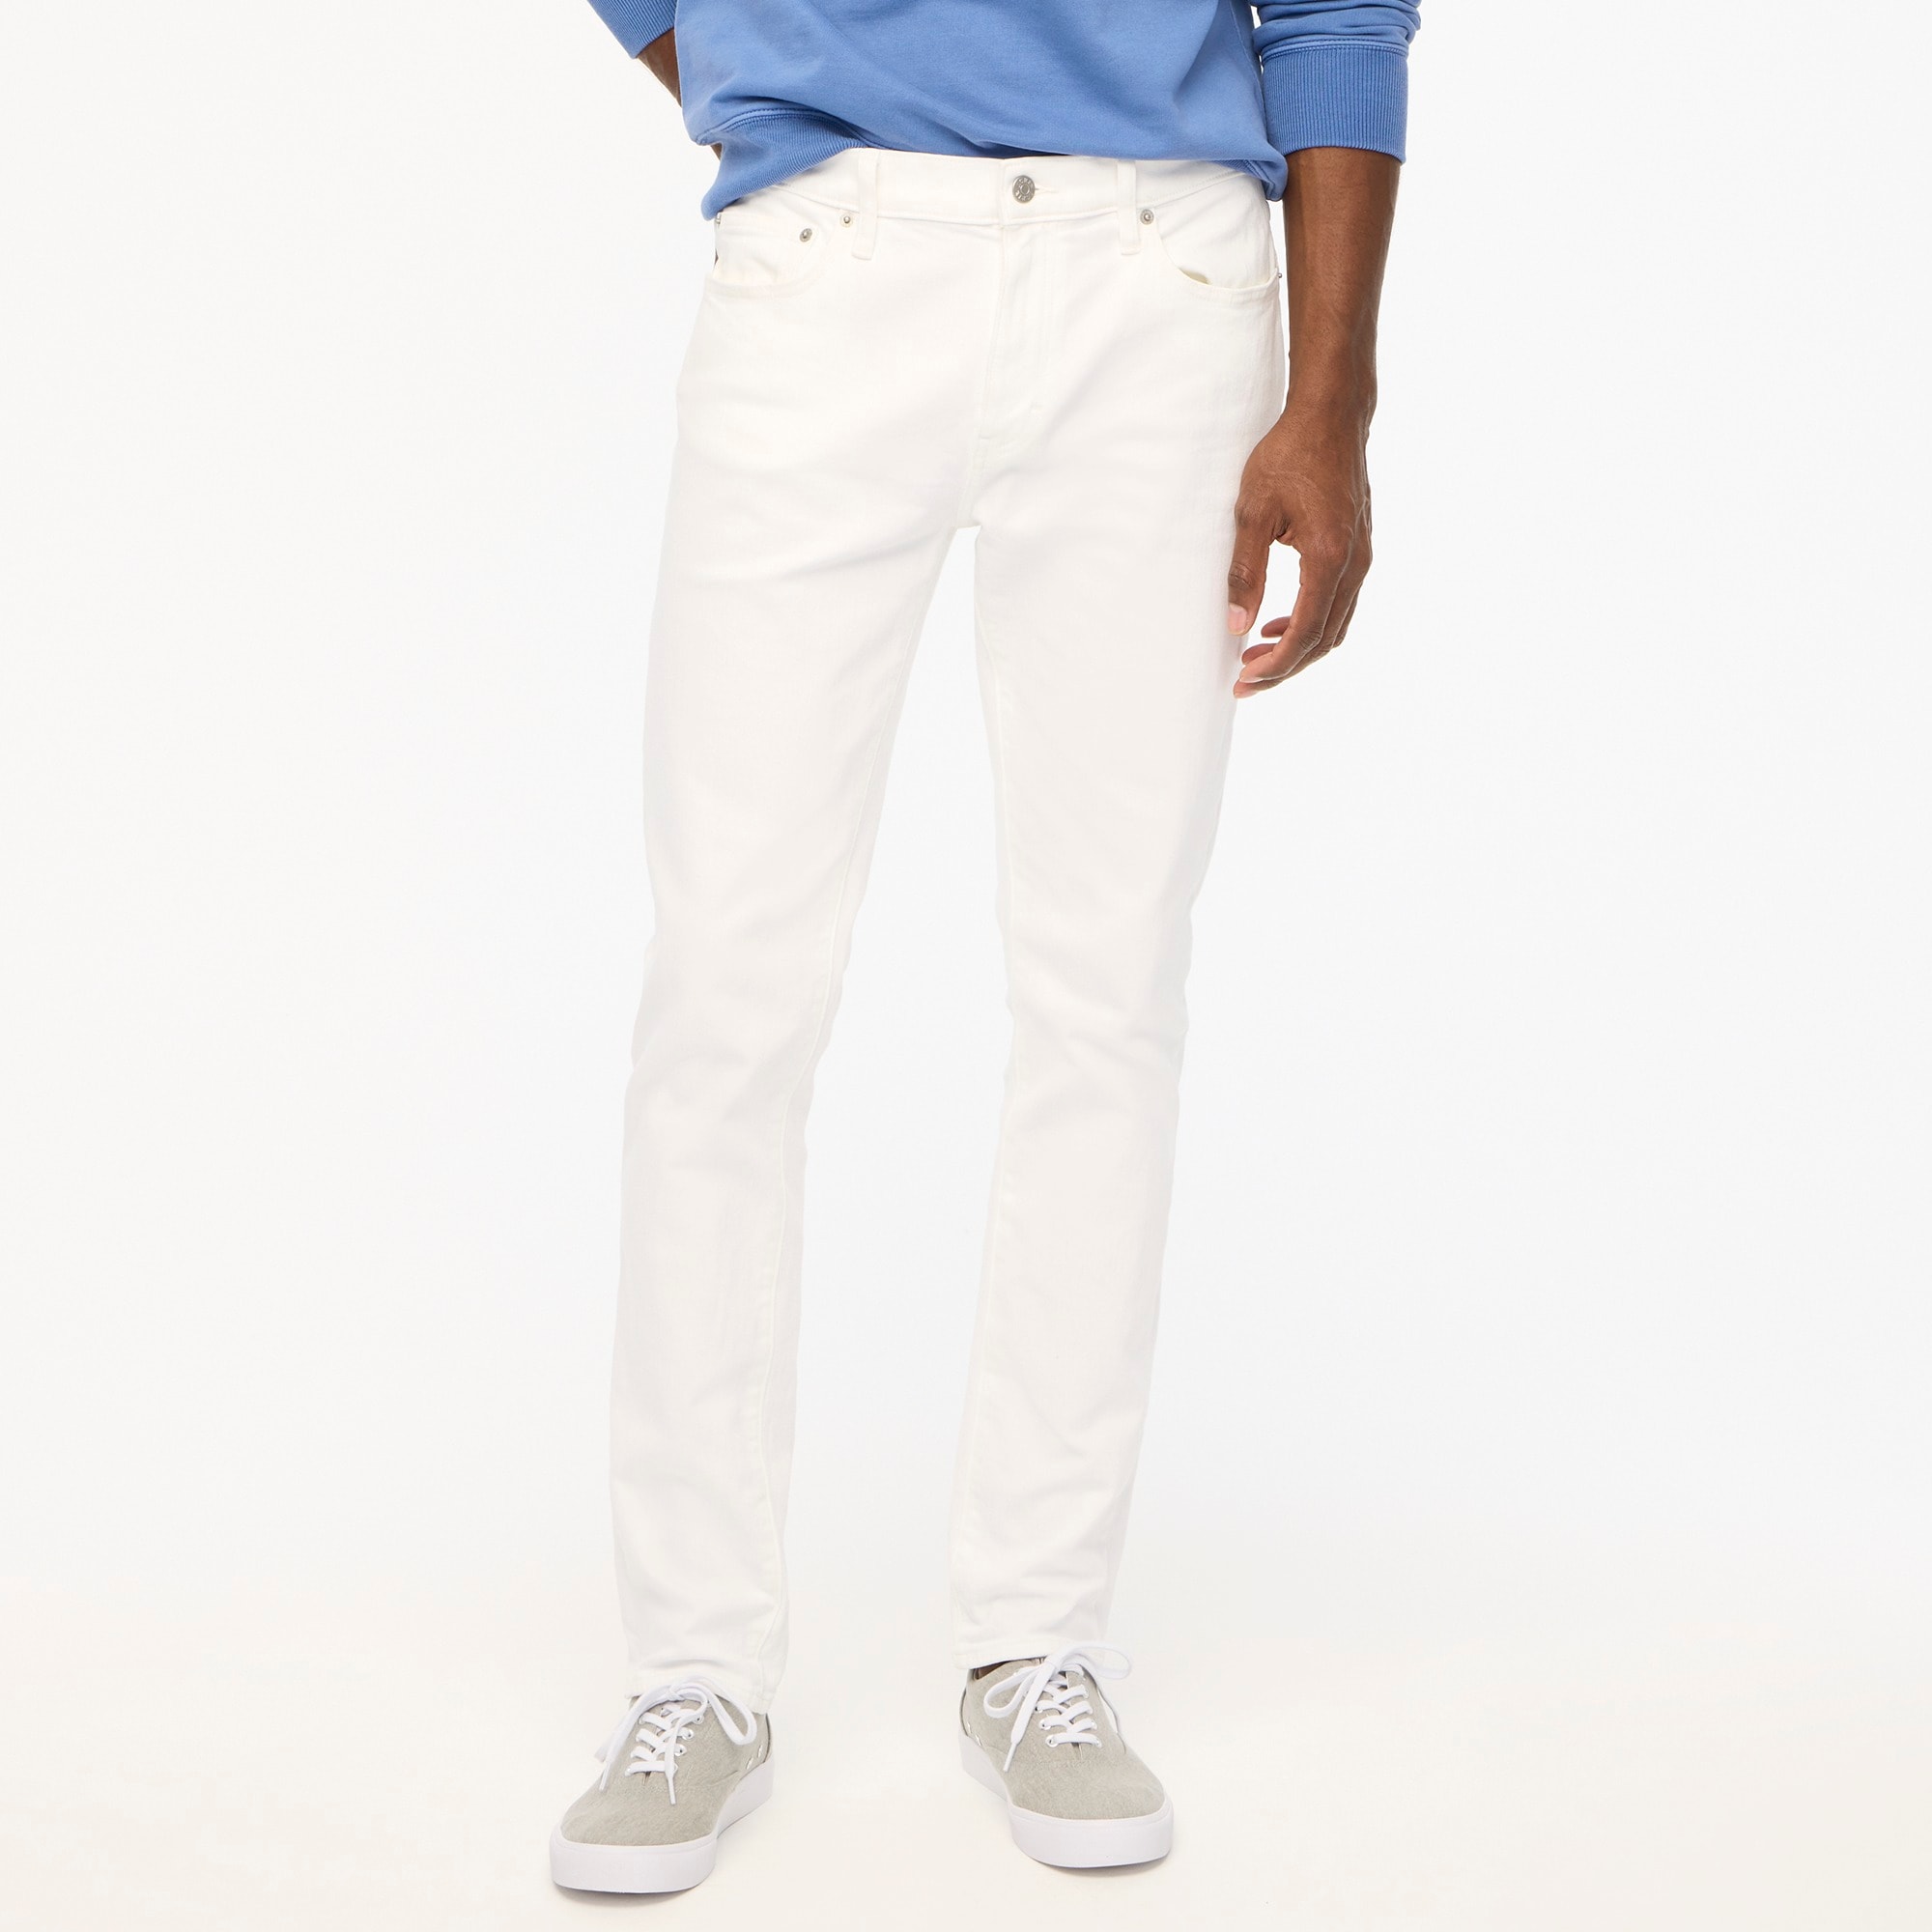 Jcrew Slim-fit flex jean in white